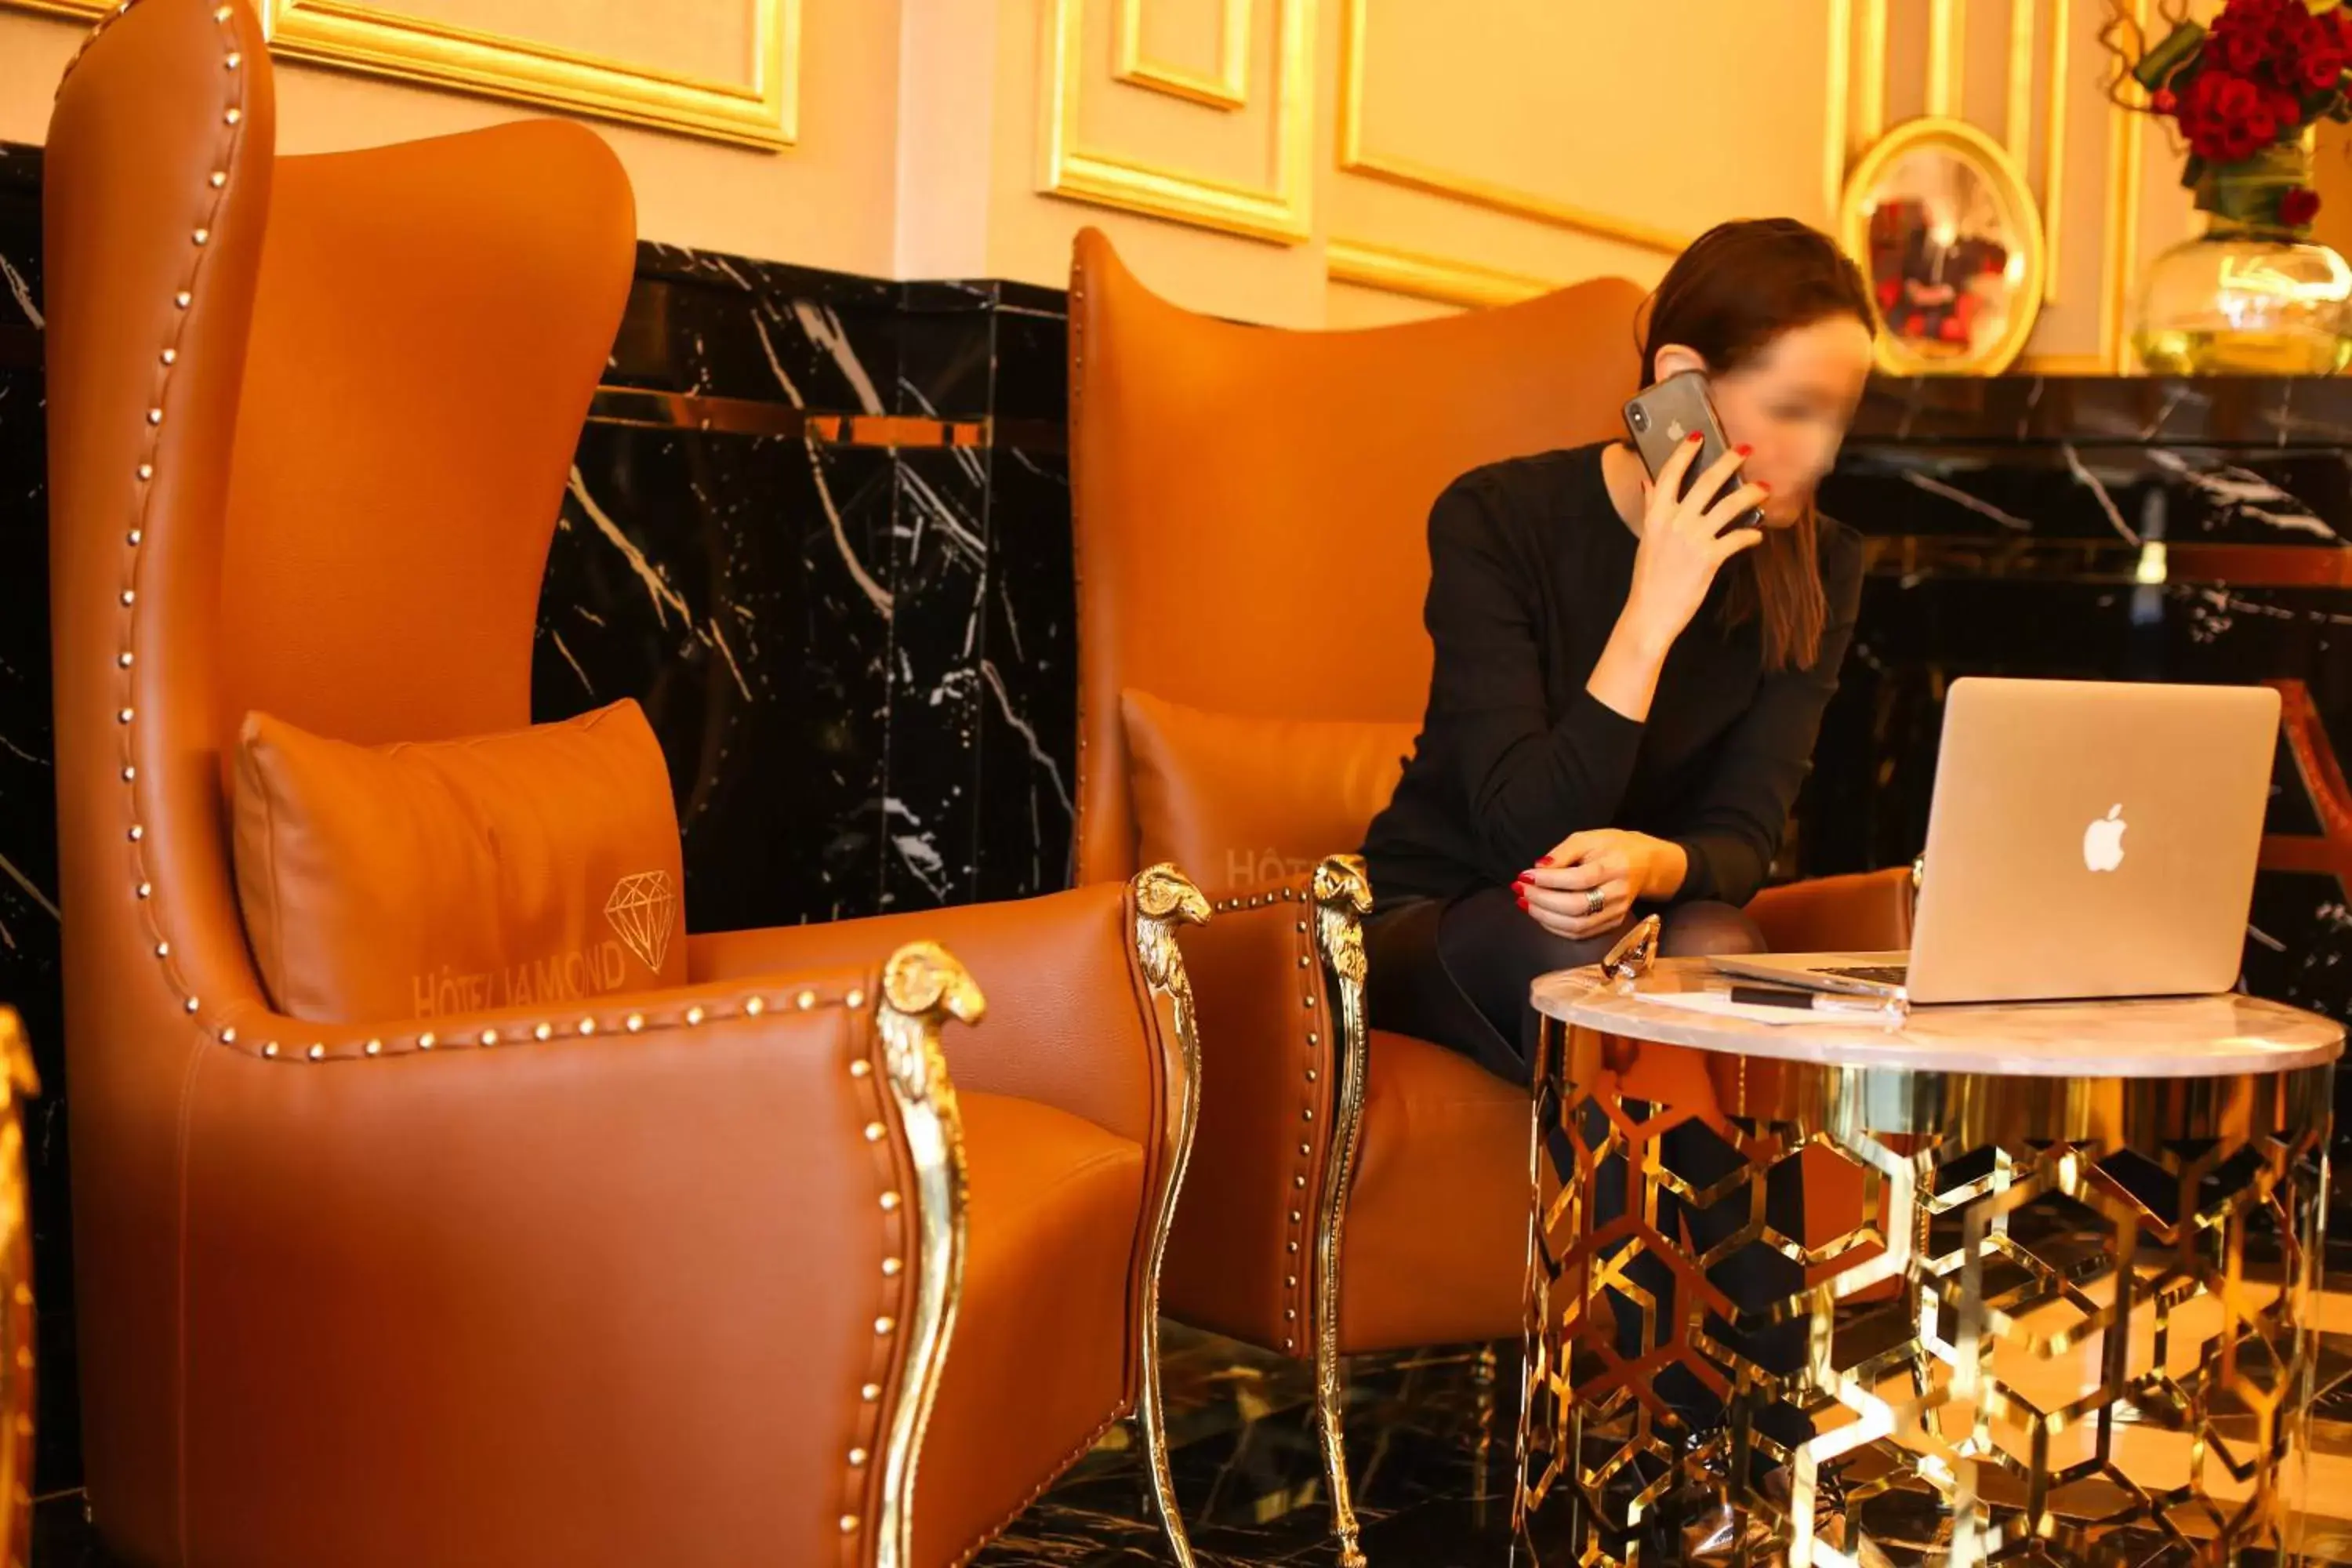 Lobby or reception in Suite Hotel Casa Diamond